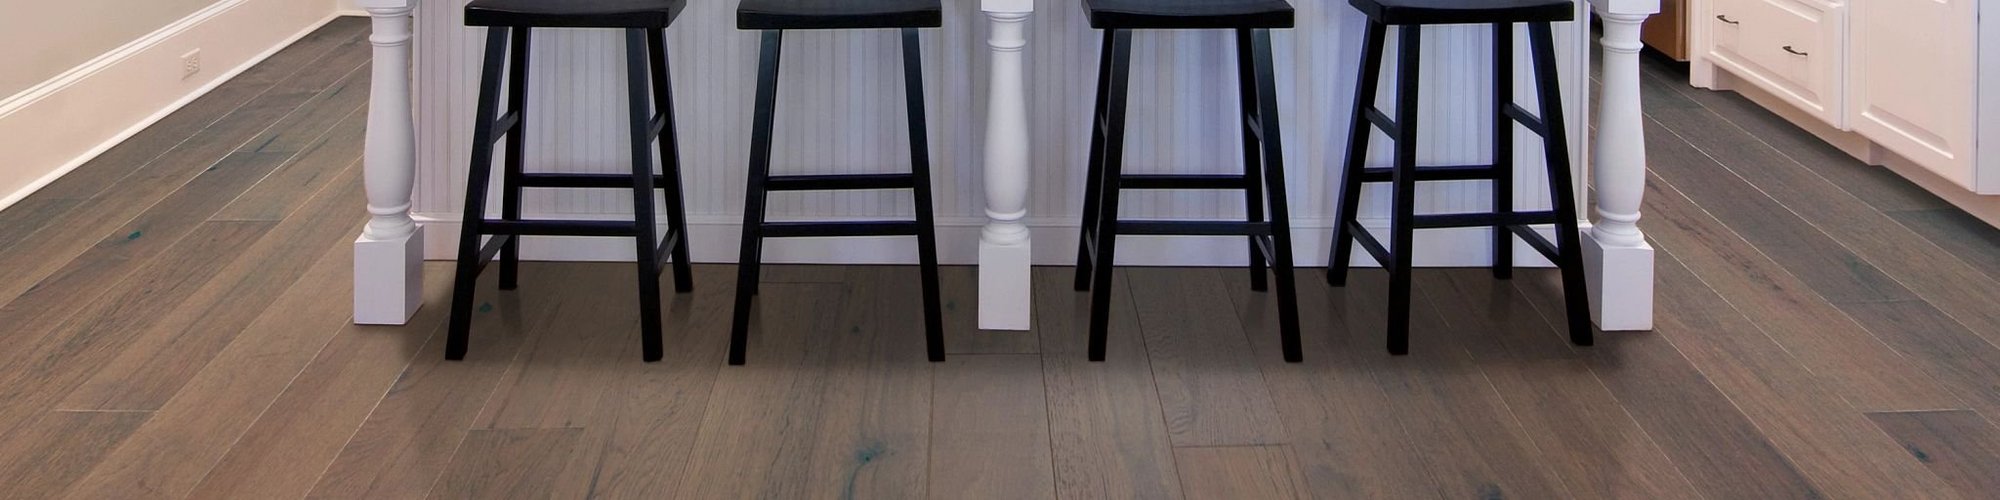 bar stools on hardwood floor - Floors2Interiors in TX